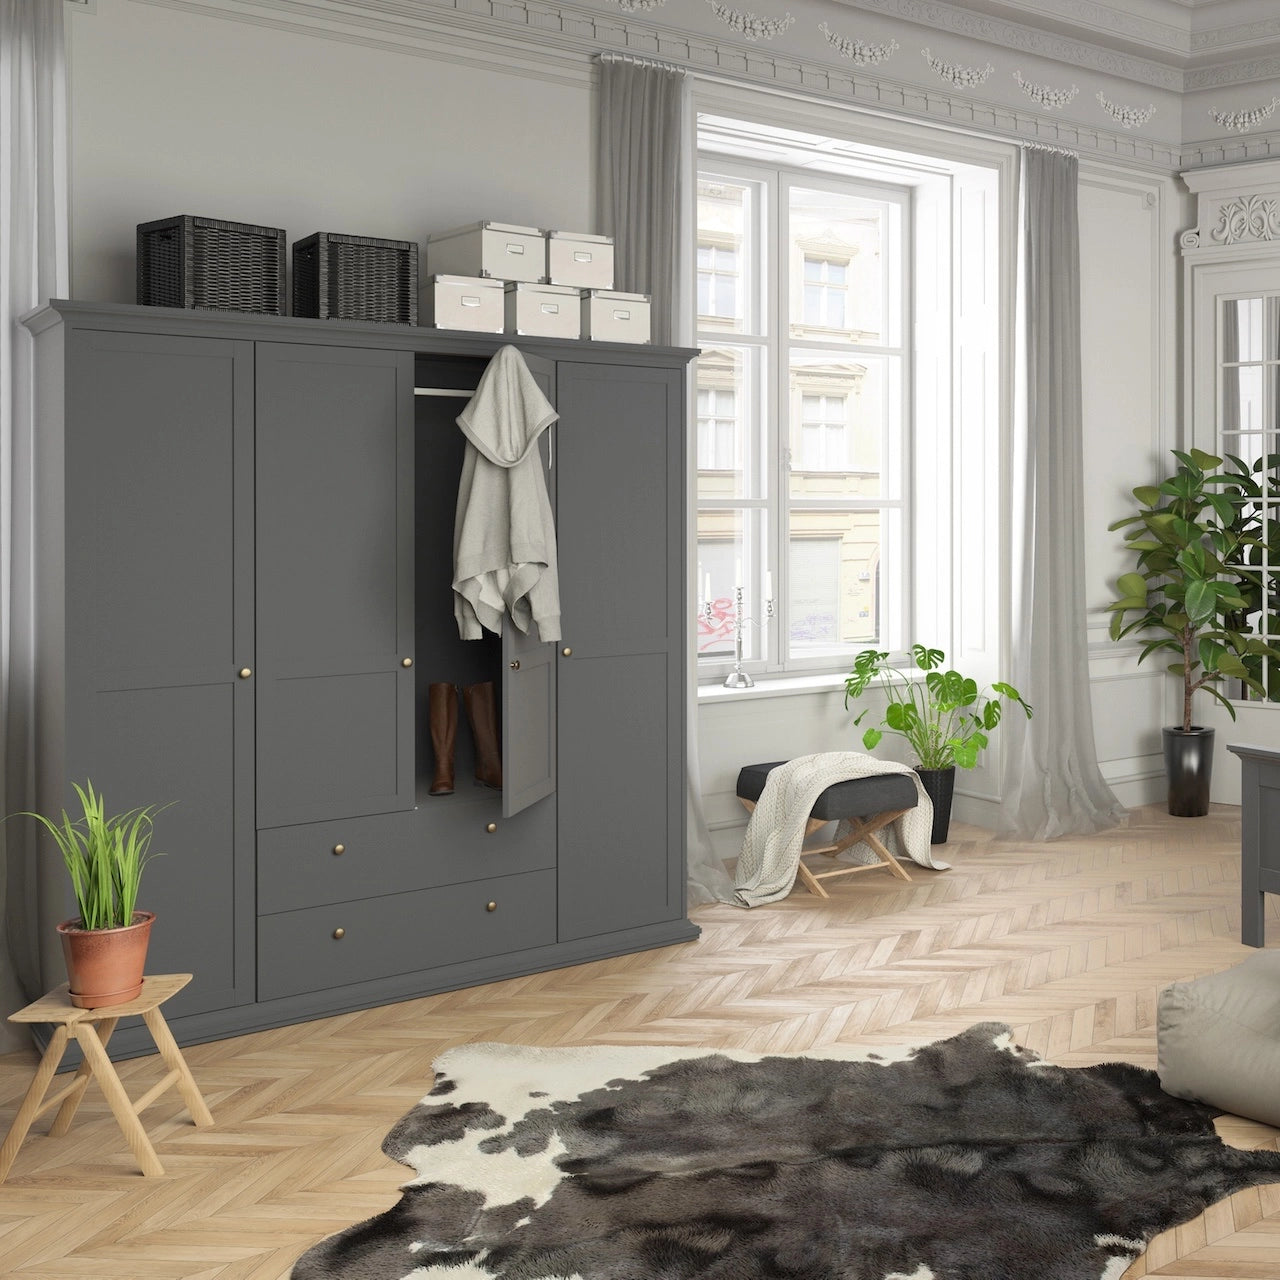 Furniture To Go Paris Wardrobe with 4 Doors & 2 Drawers in Matt Grey